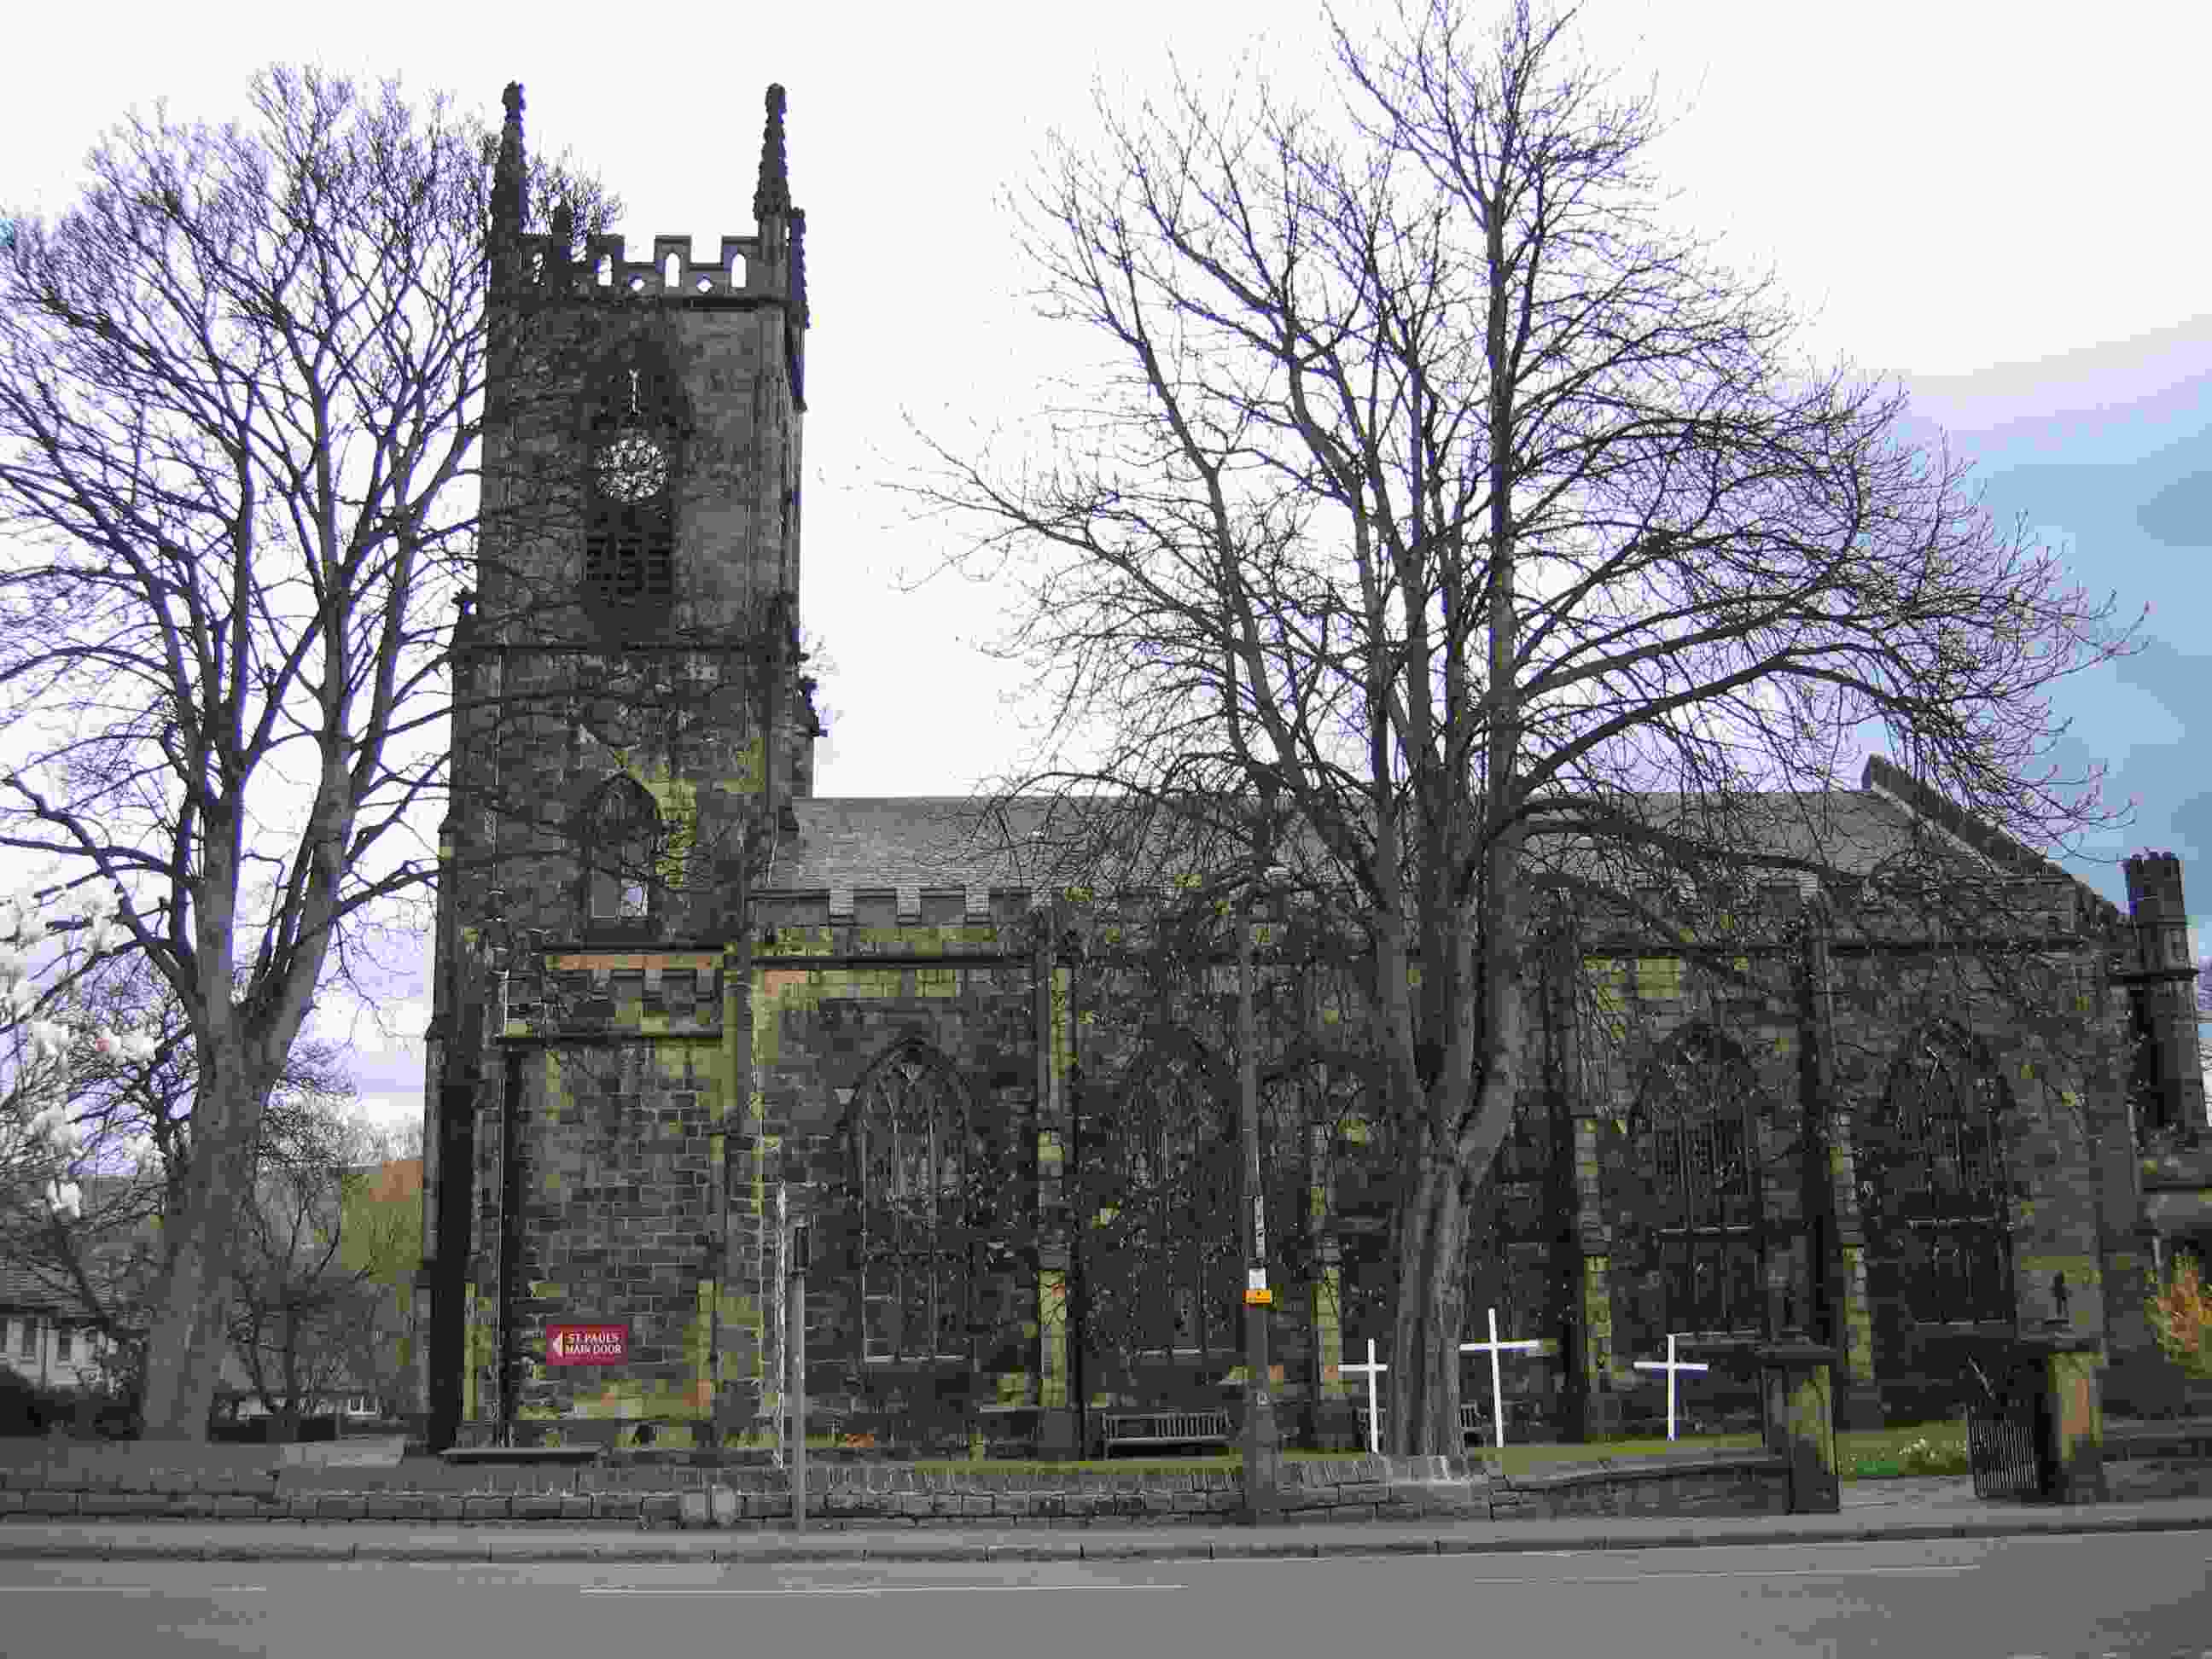 St Paul's Church, Shipley, Diocese of Bradford